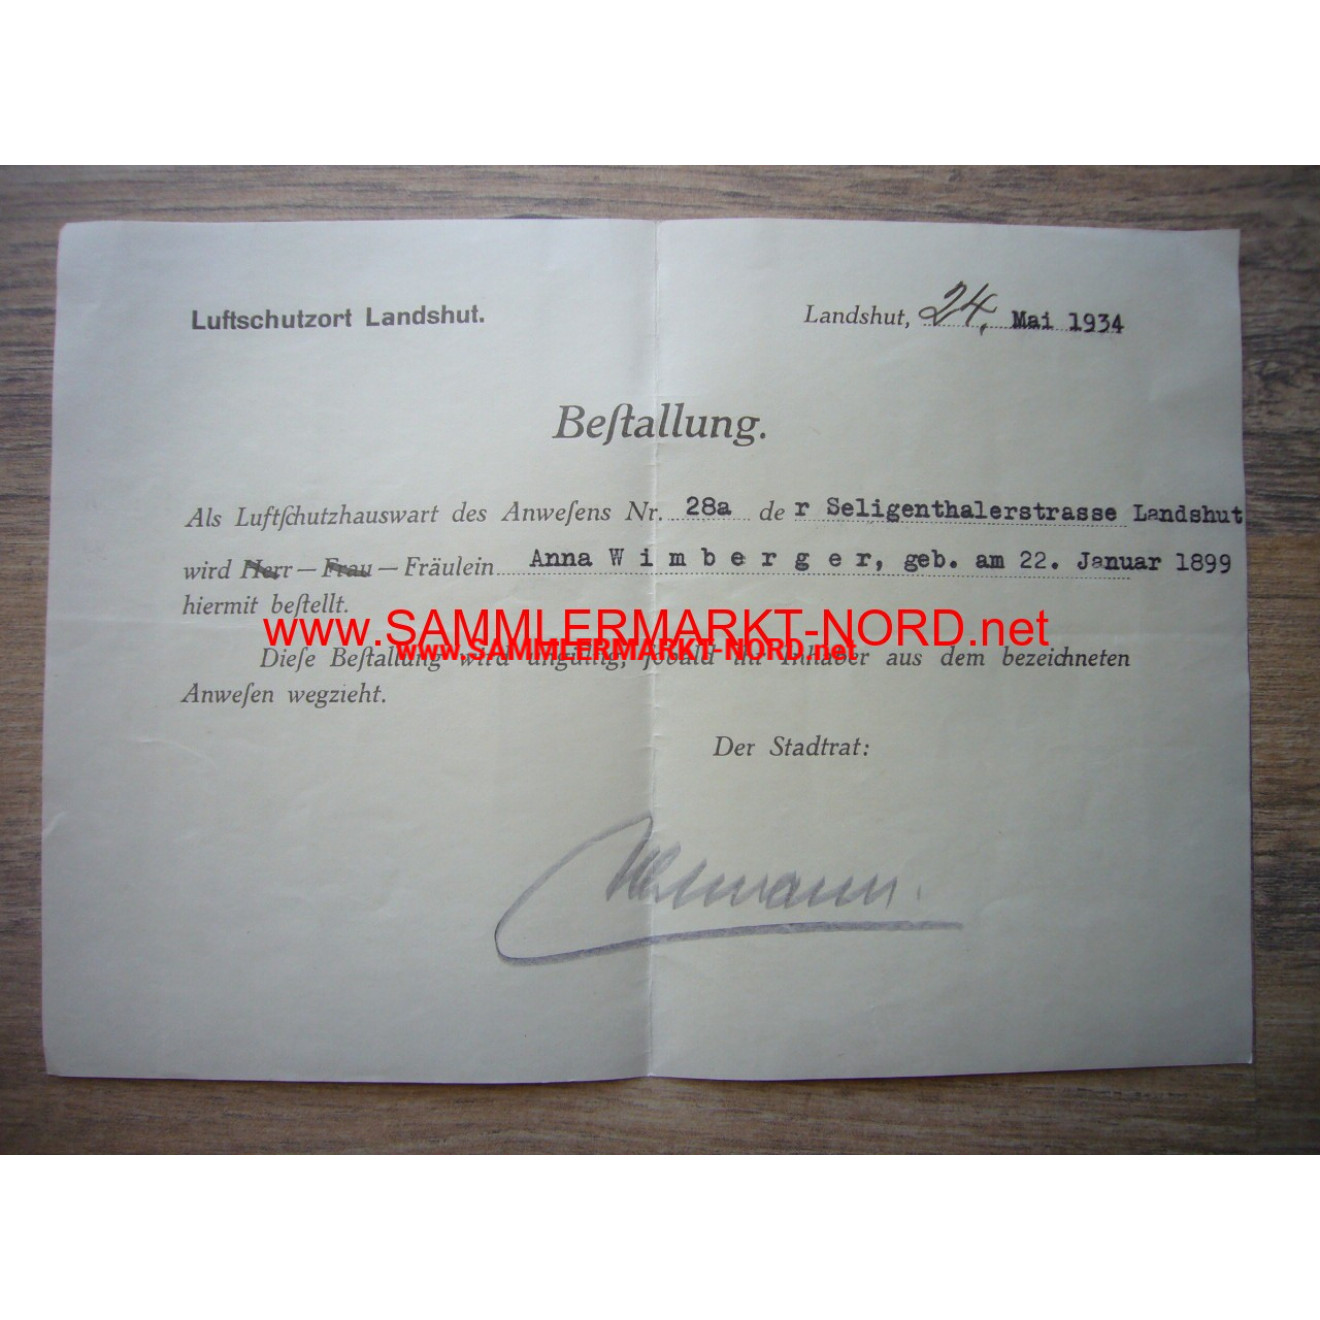 RLB Luferschutzort Landshut - certificate of appointment 1934